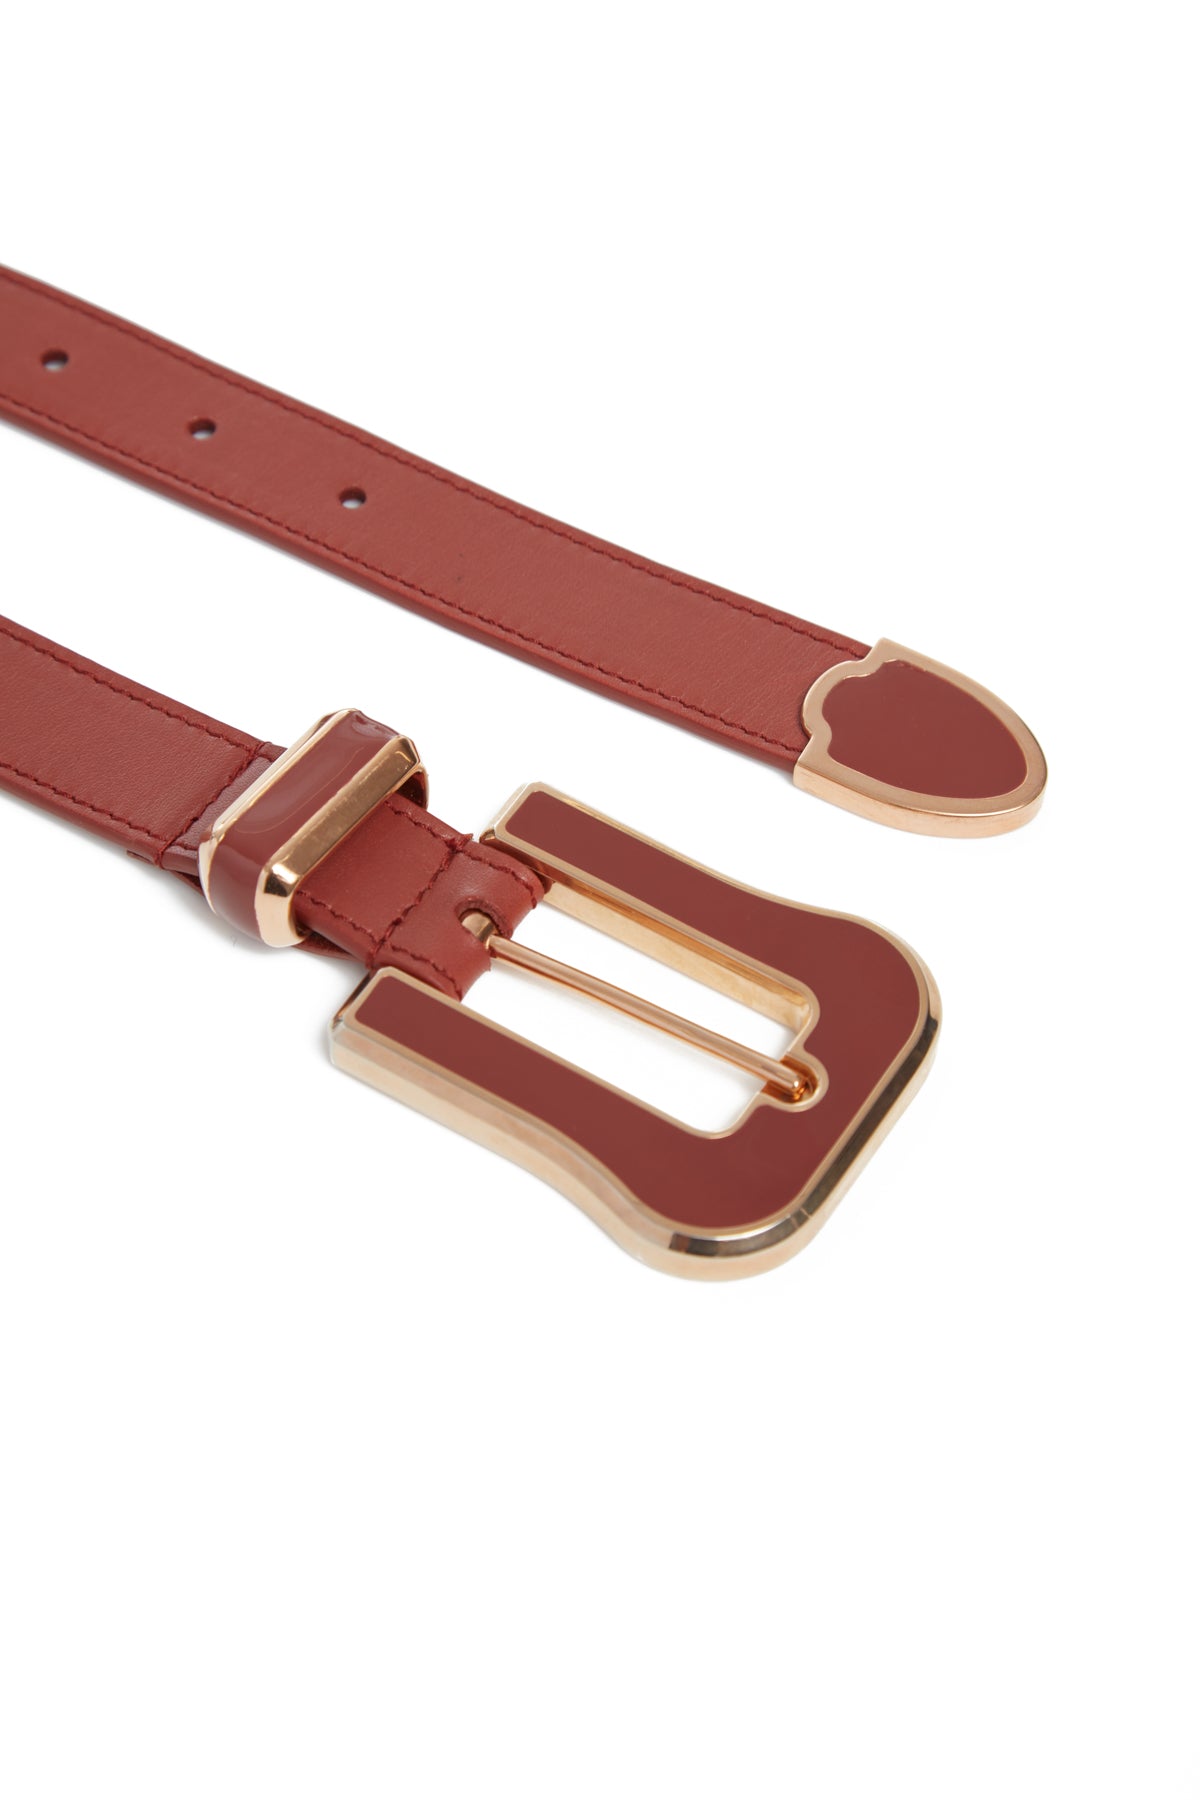 Austine Belt in Cognac Leather